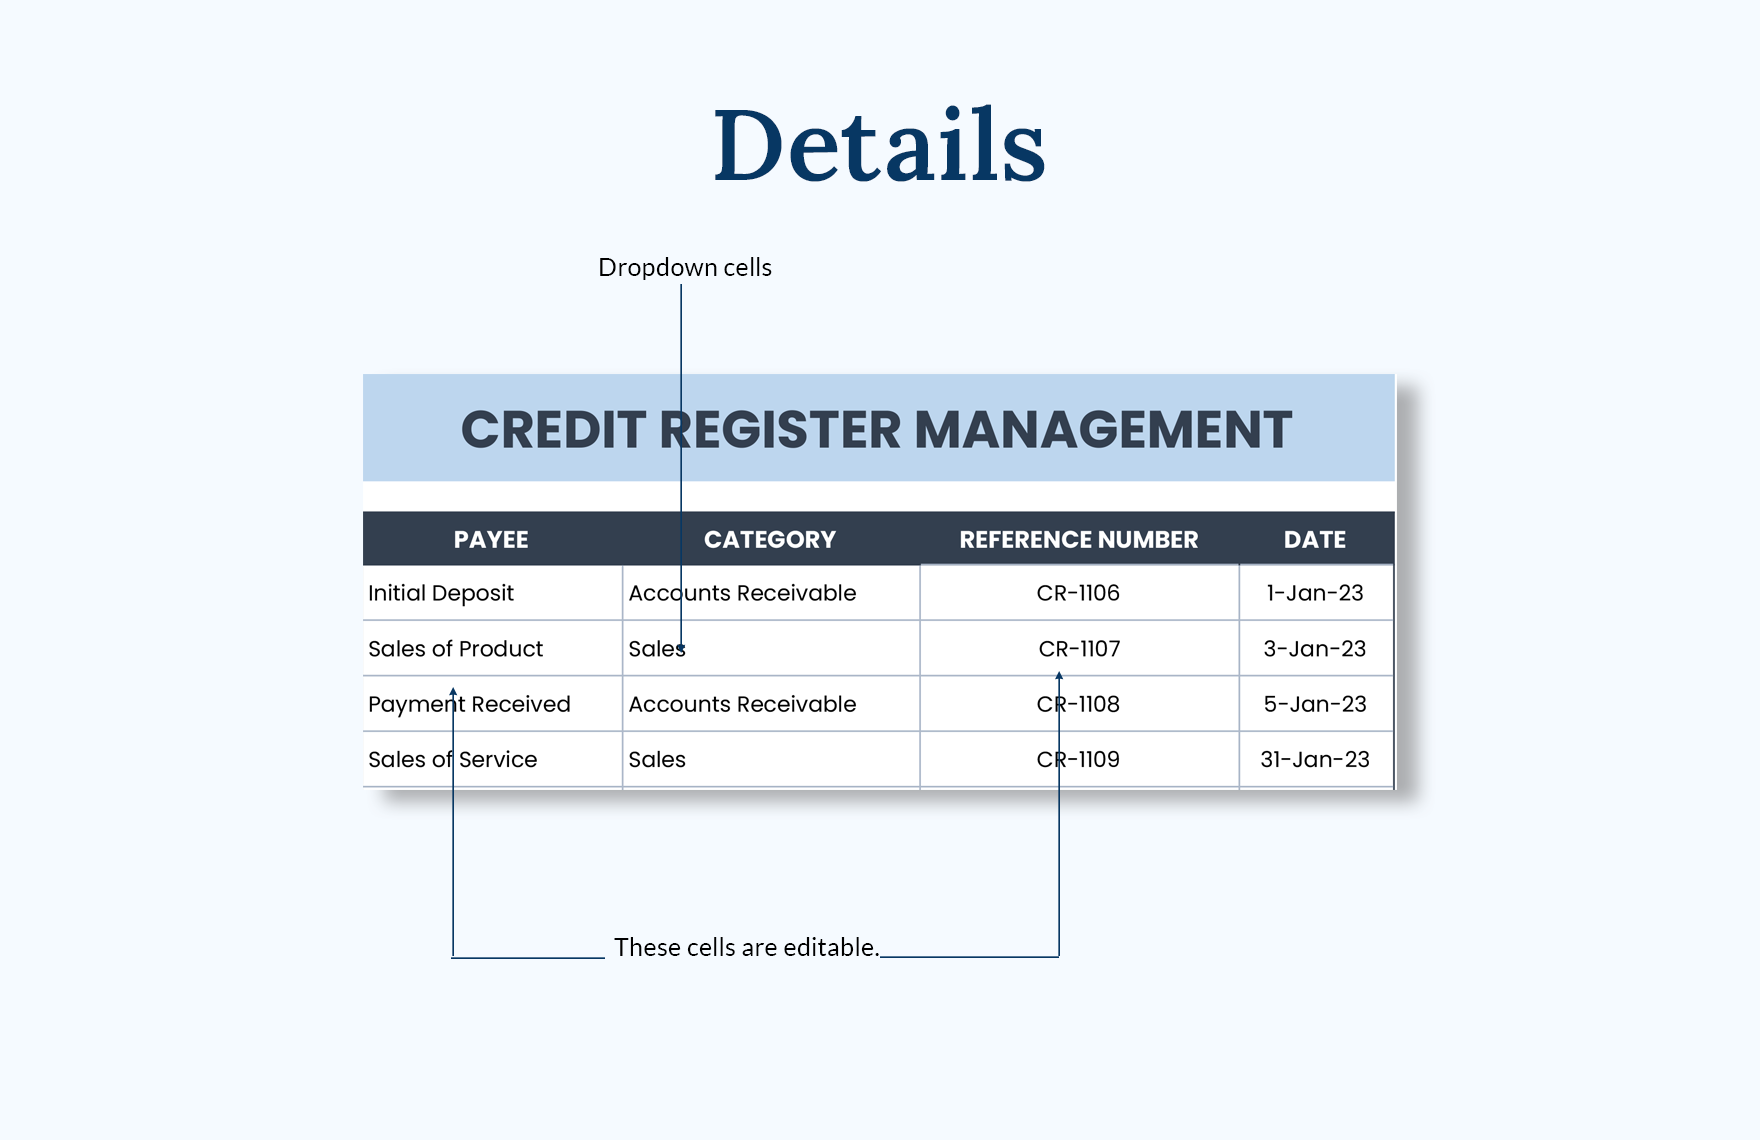 Credit Account Register Template